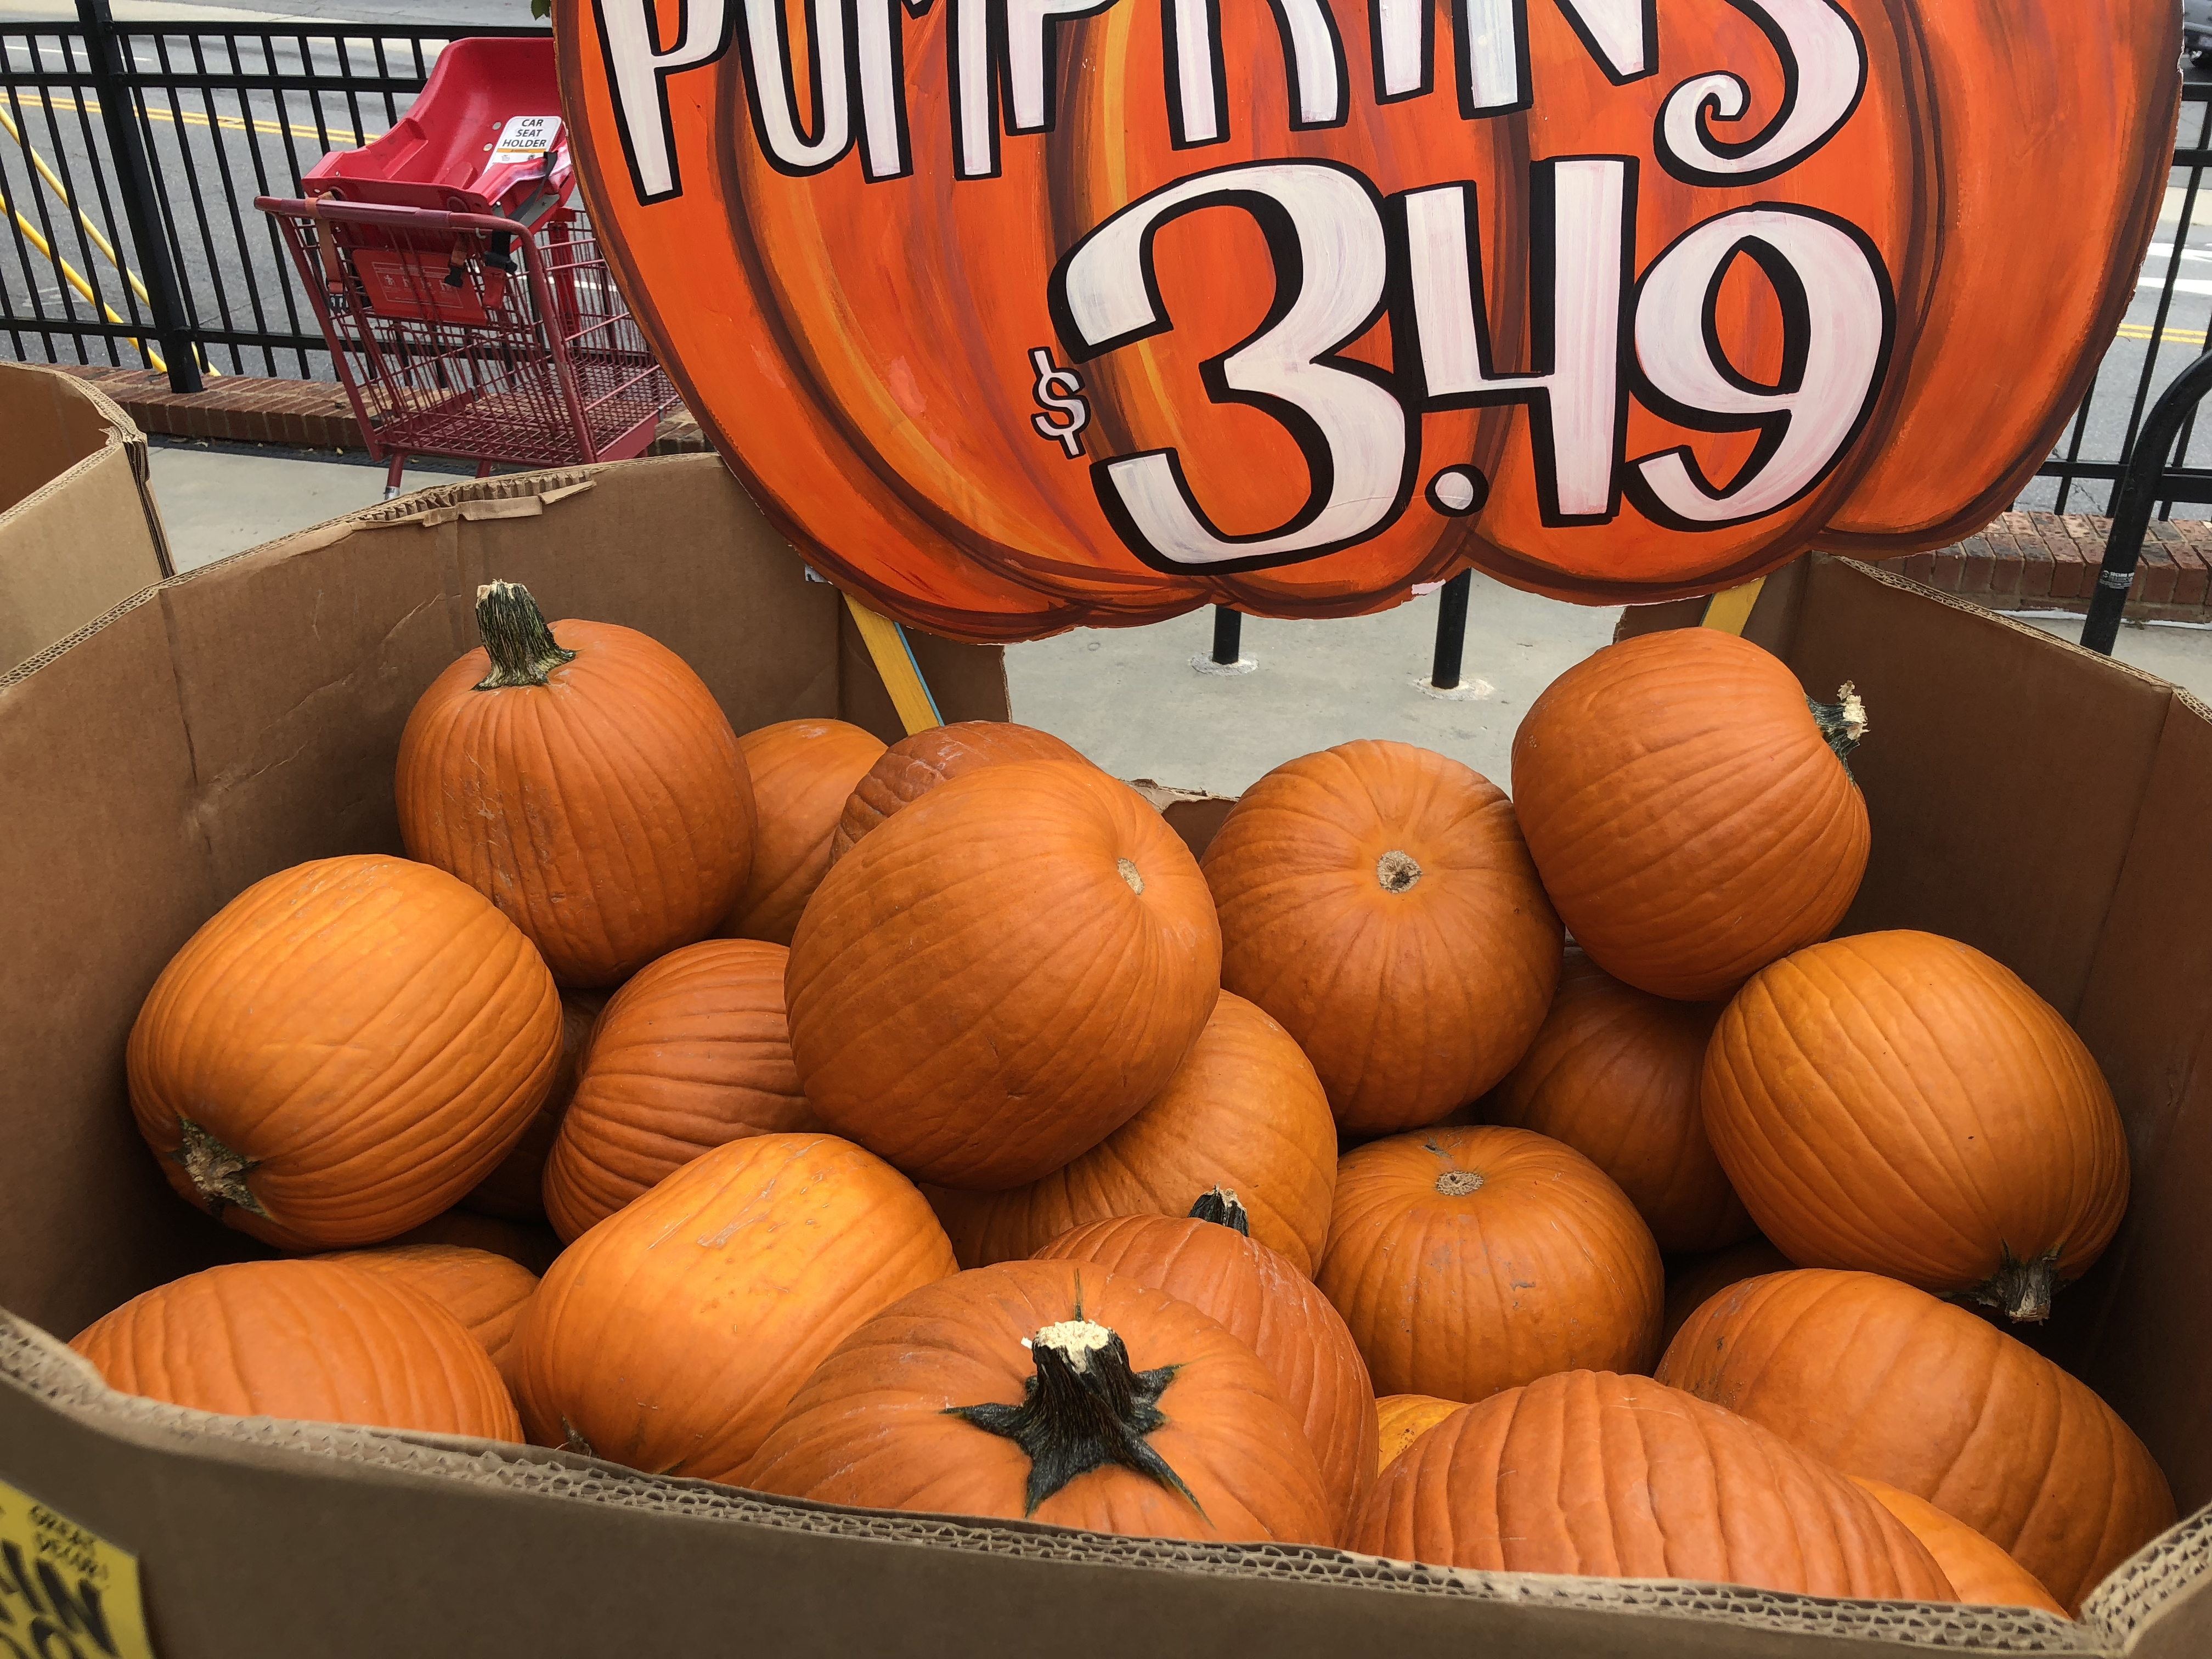 Deals on Trader Joe's Pumpkin items – Pumpkins at Trader Joe's